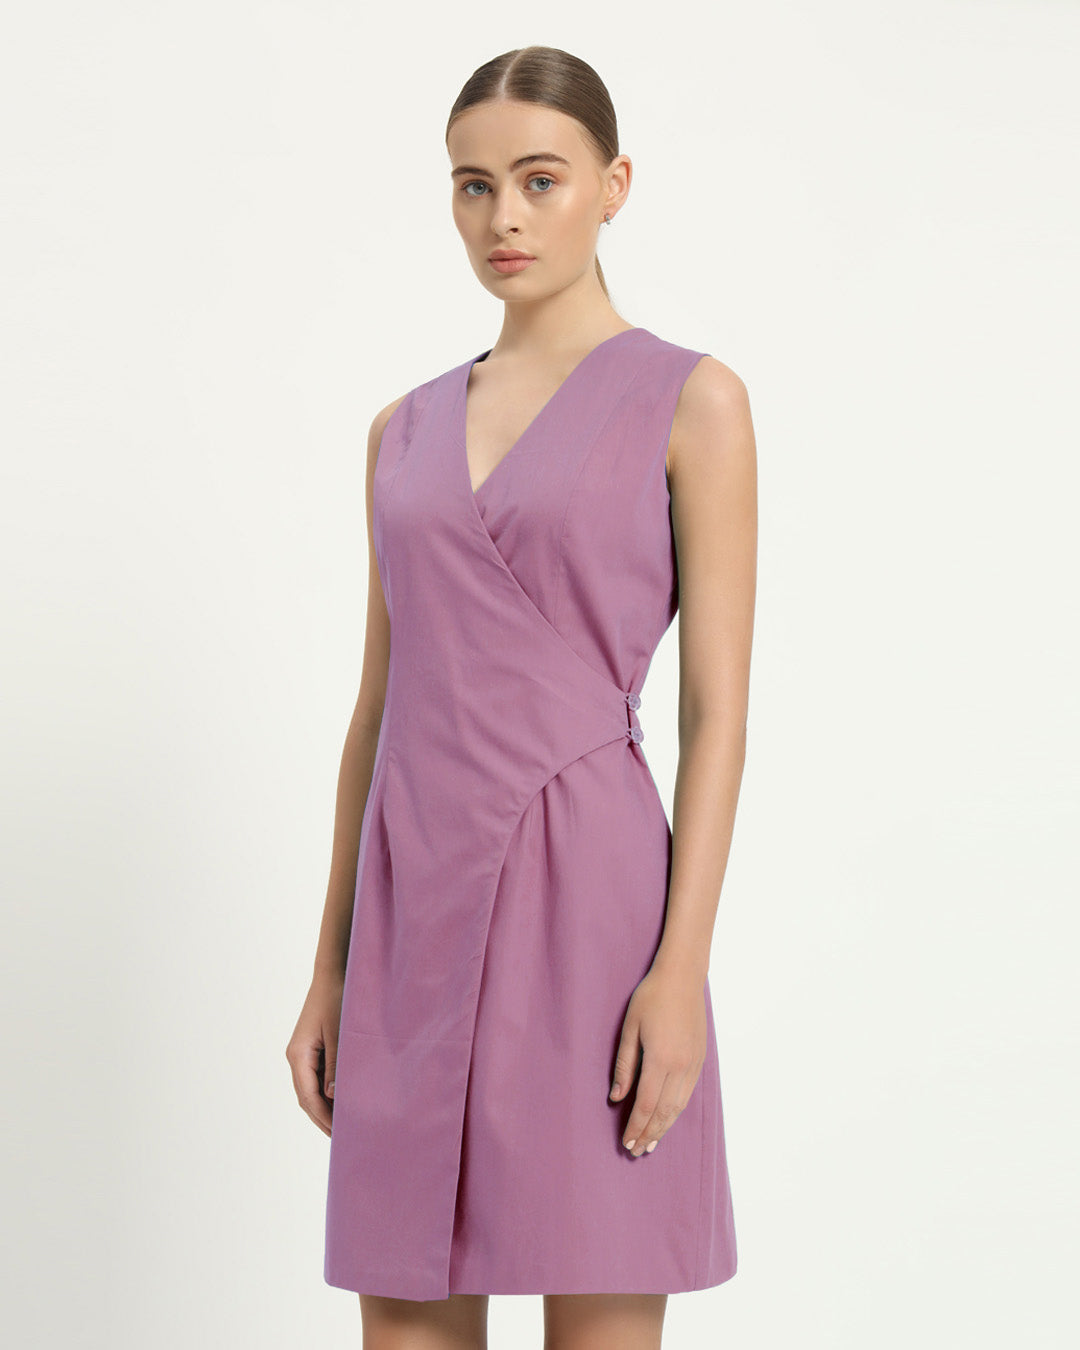 The Augsberg Purple Swirl Cotton Dress